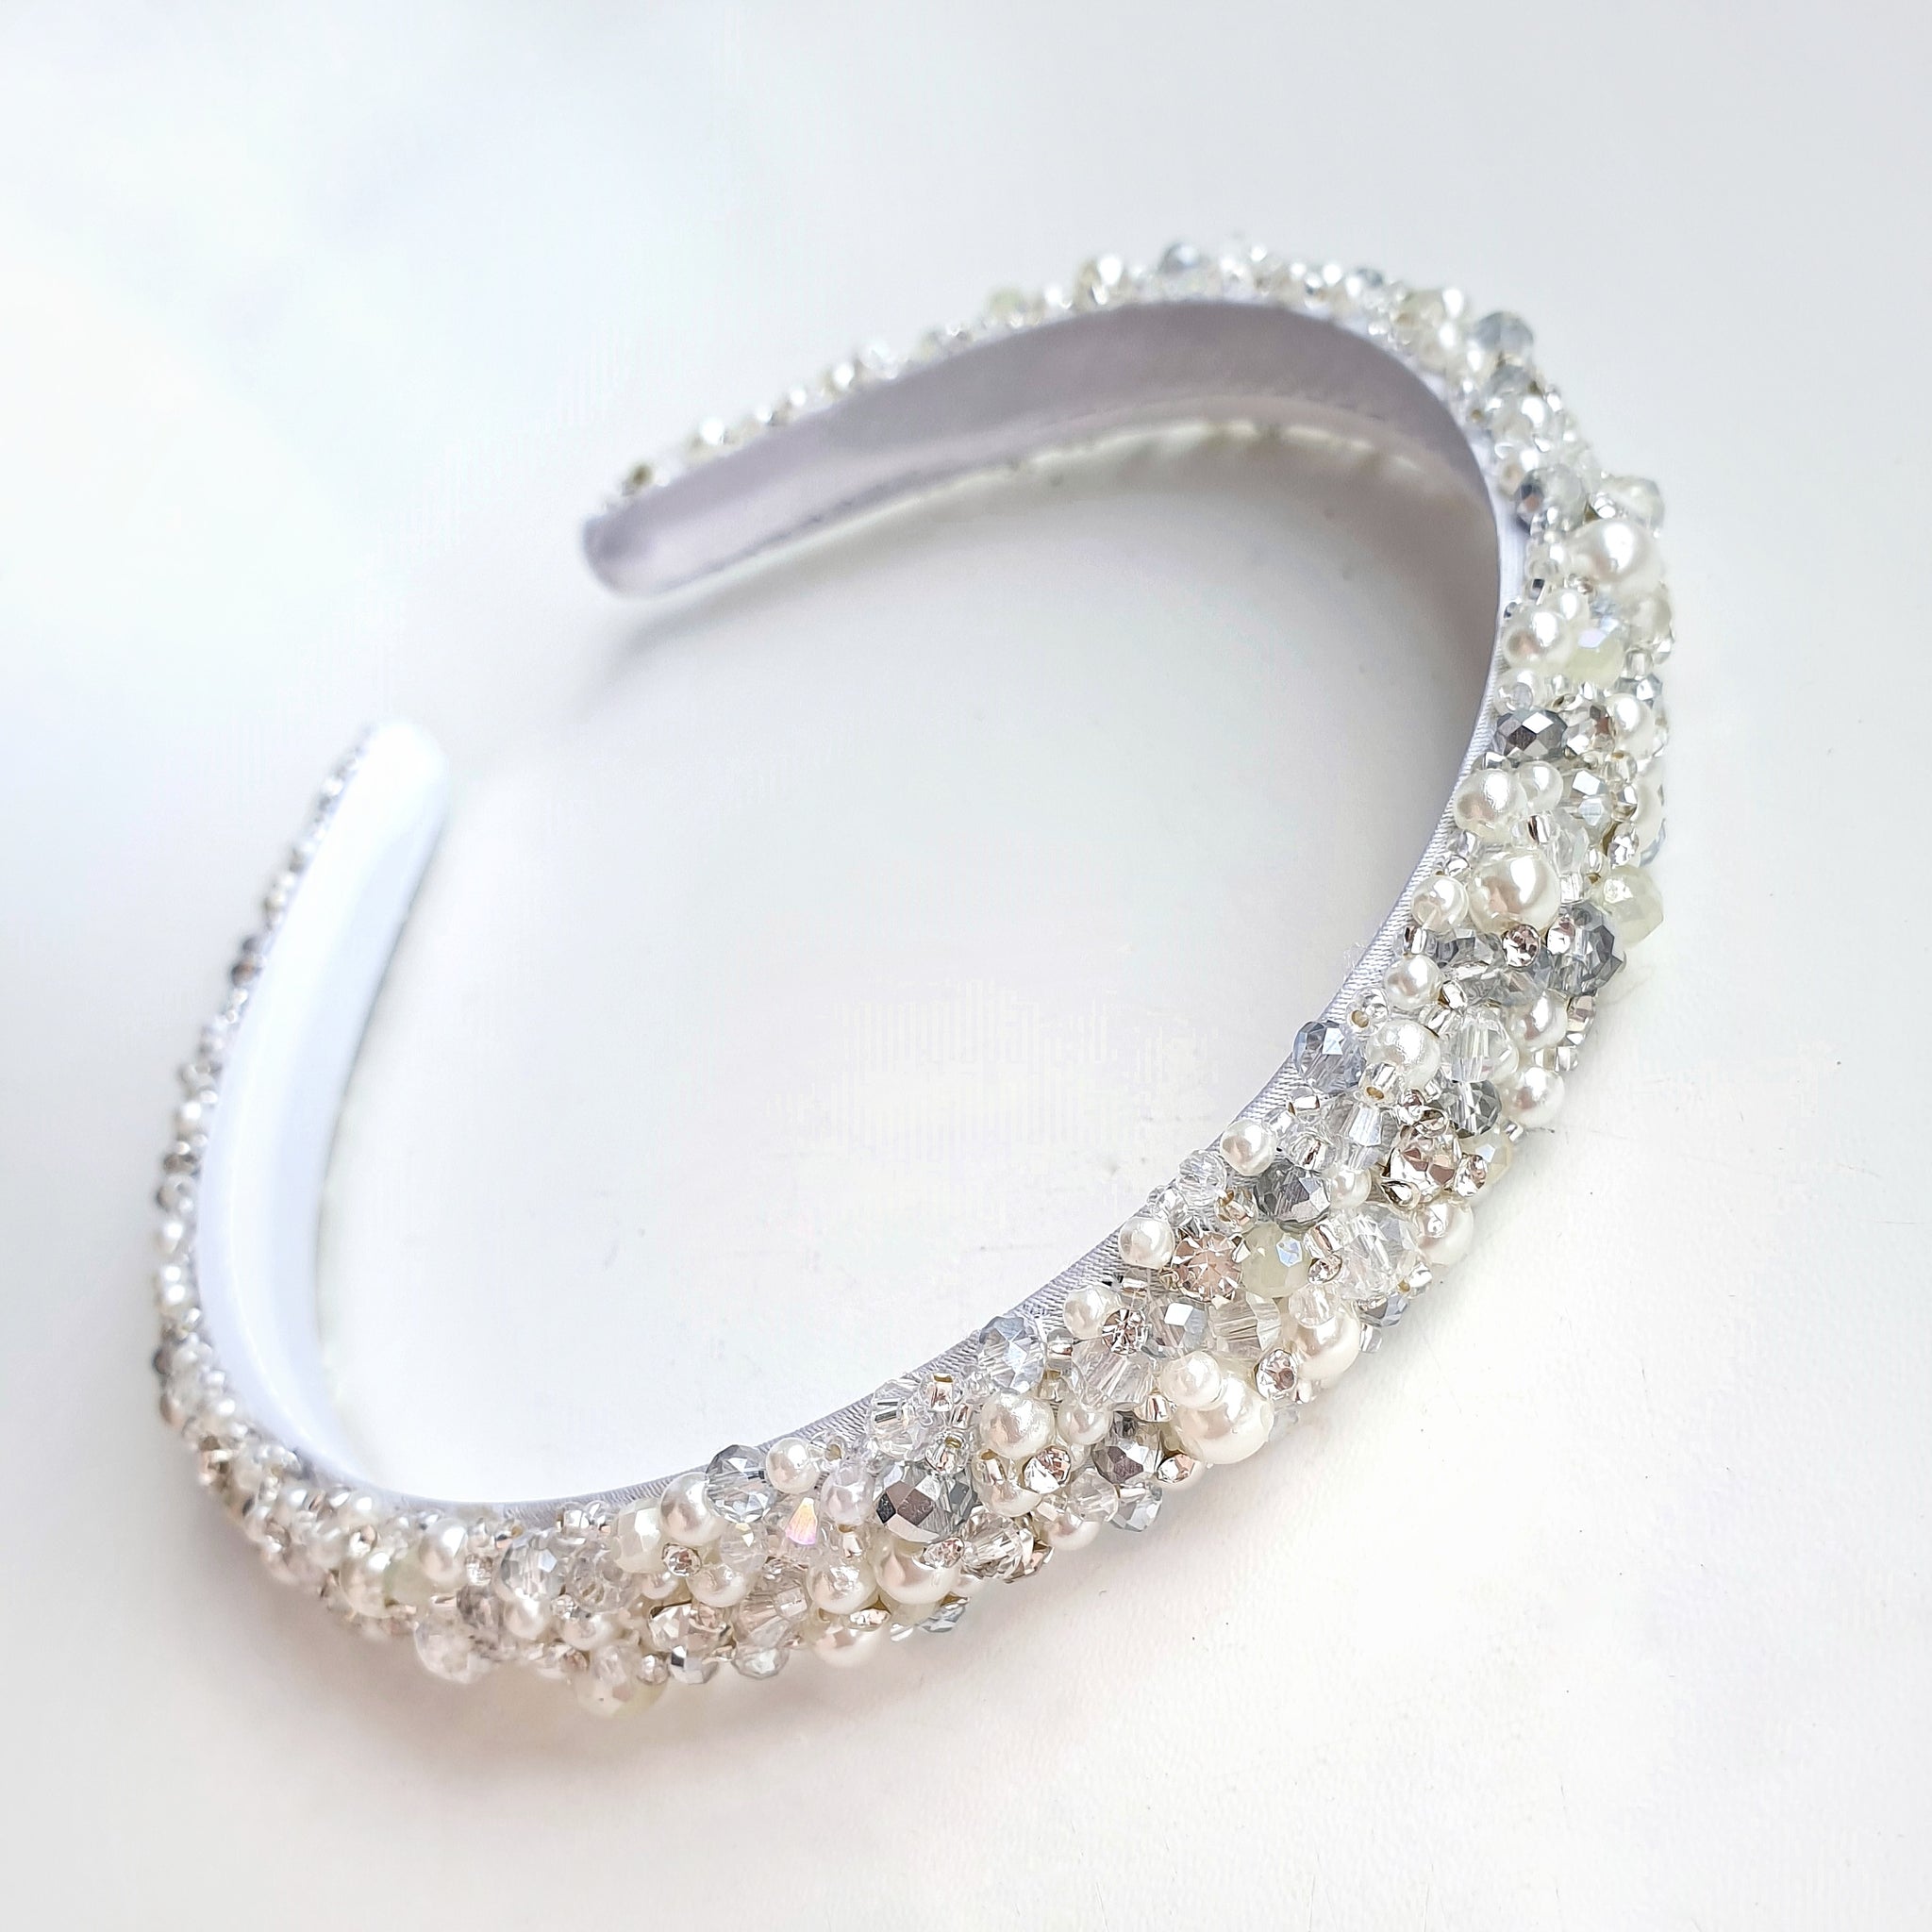 Wide pearl bridal headband